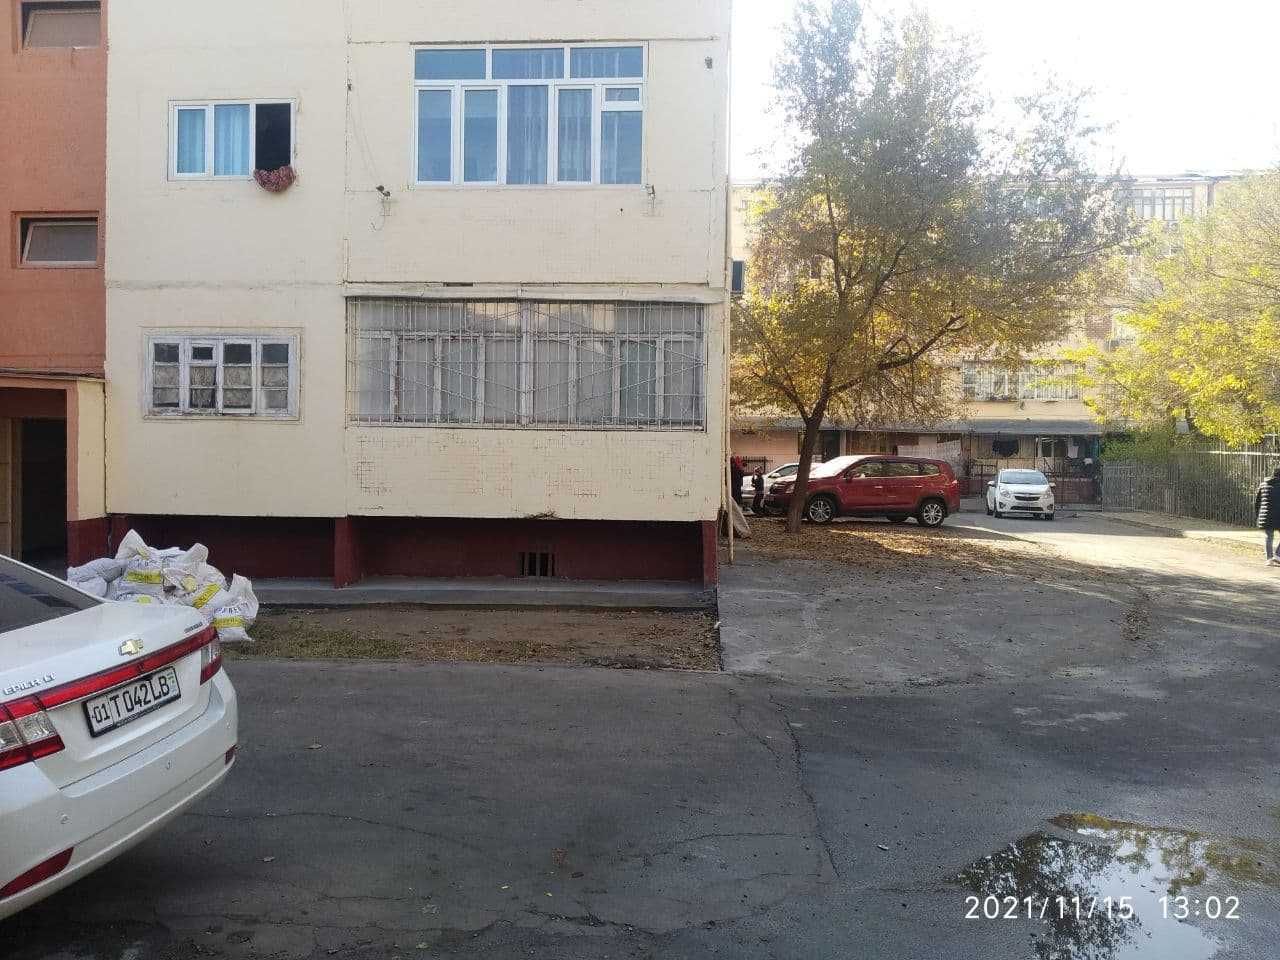 Продаю квартиру в Шайхантахурском районе города Ташкента.